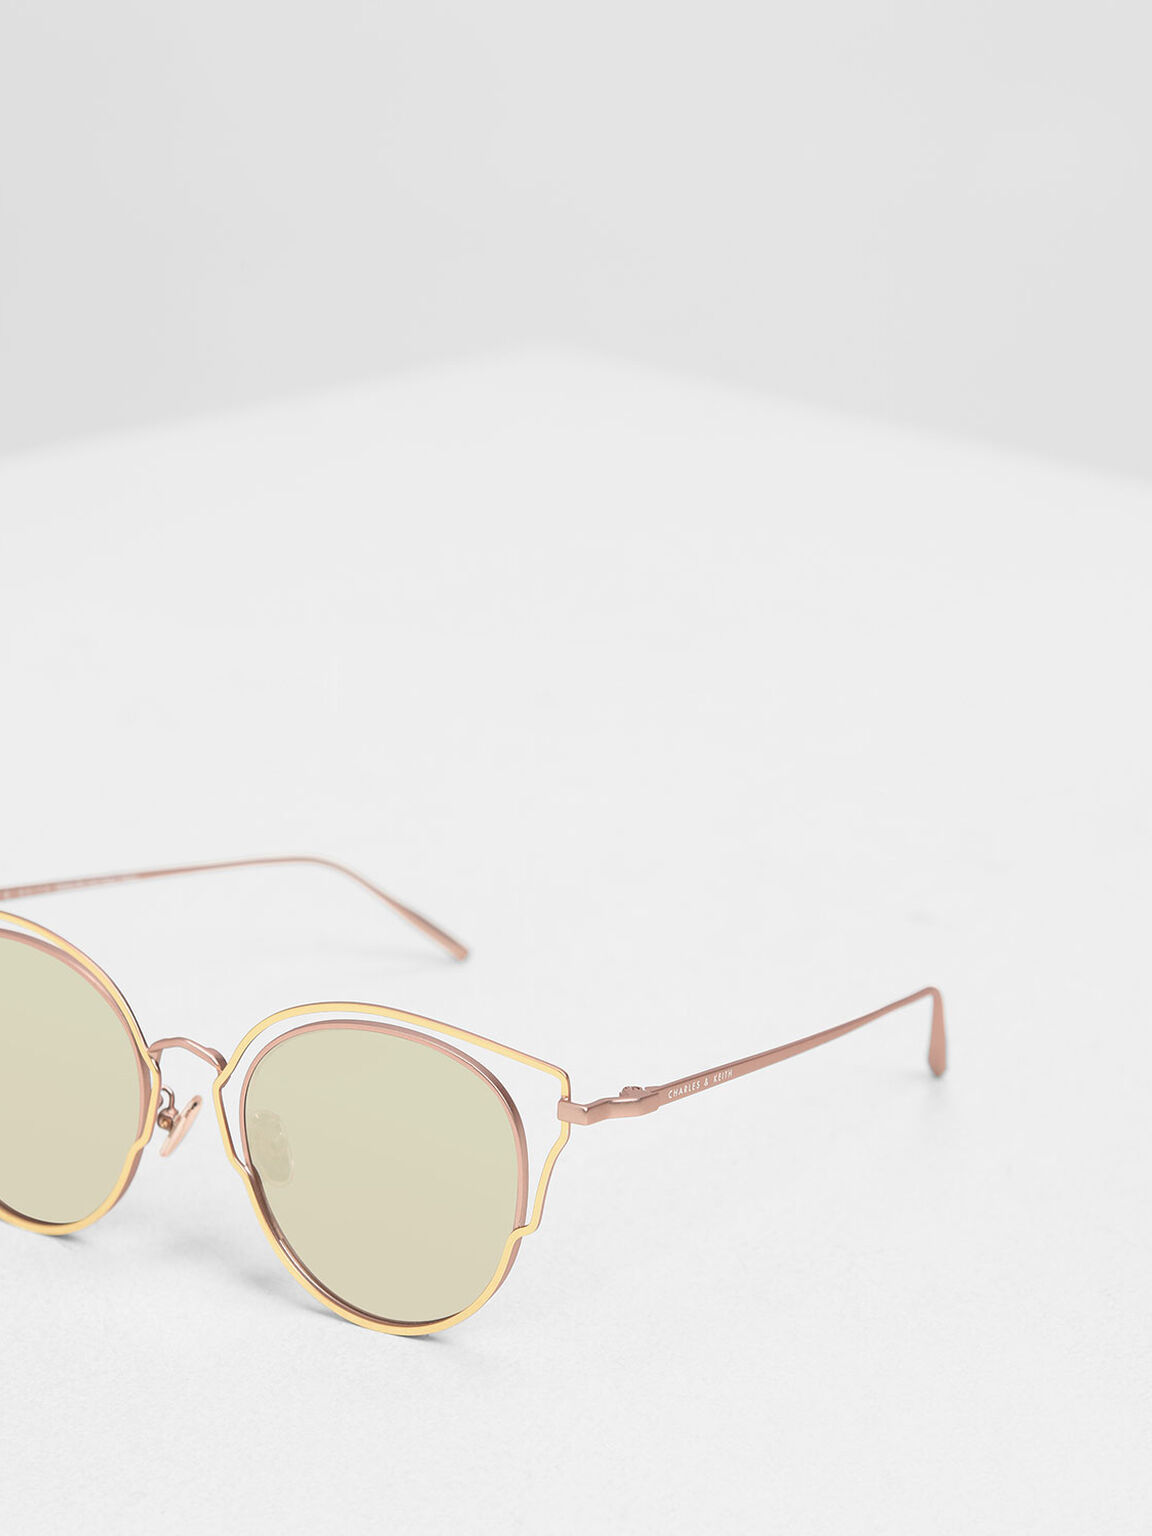 Double Frame Wingtip Sunglasses, Pink, hi-res